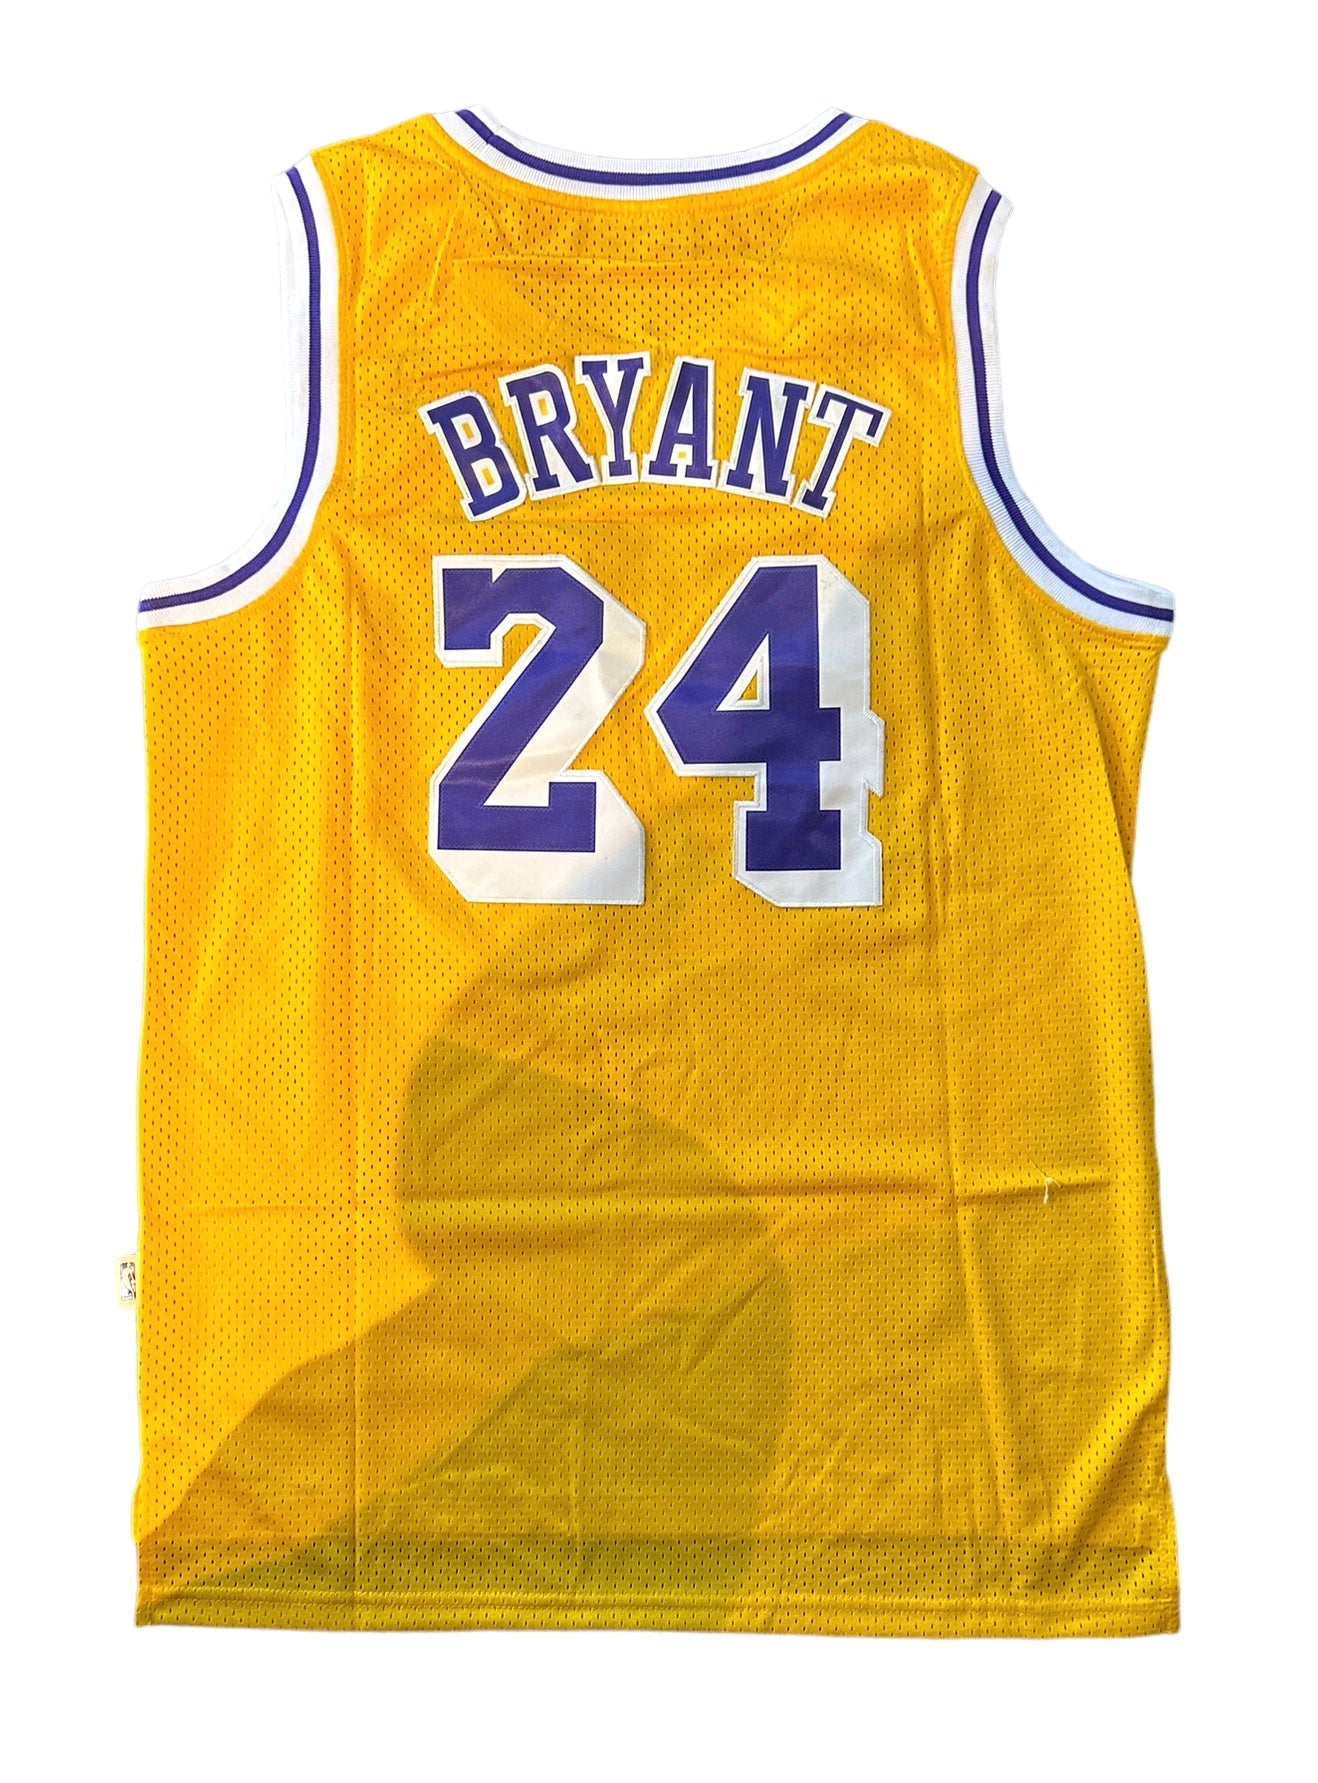 Kobe Bryant Jerseys, Kobe Bryant Shirts, Basketball Apparel, Kobe